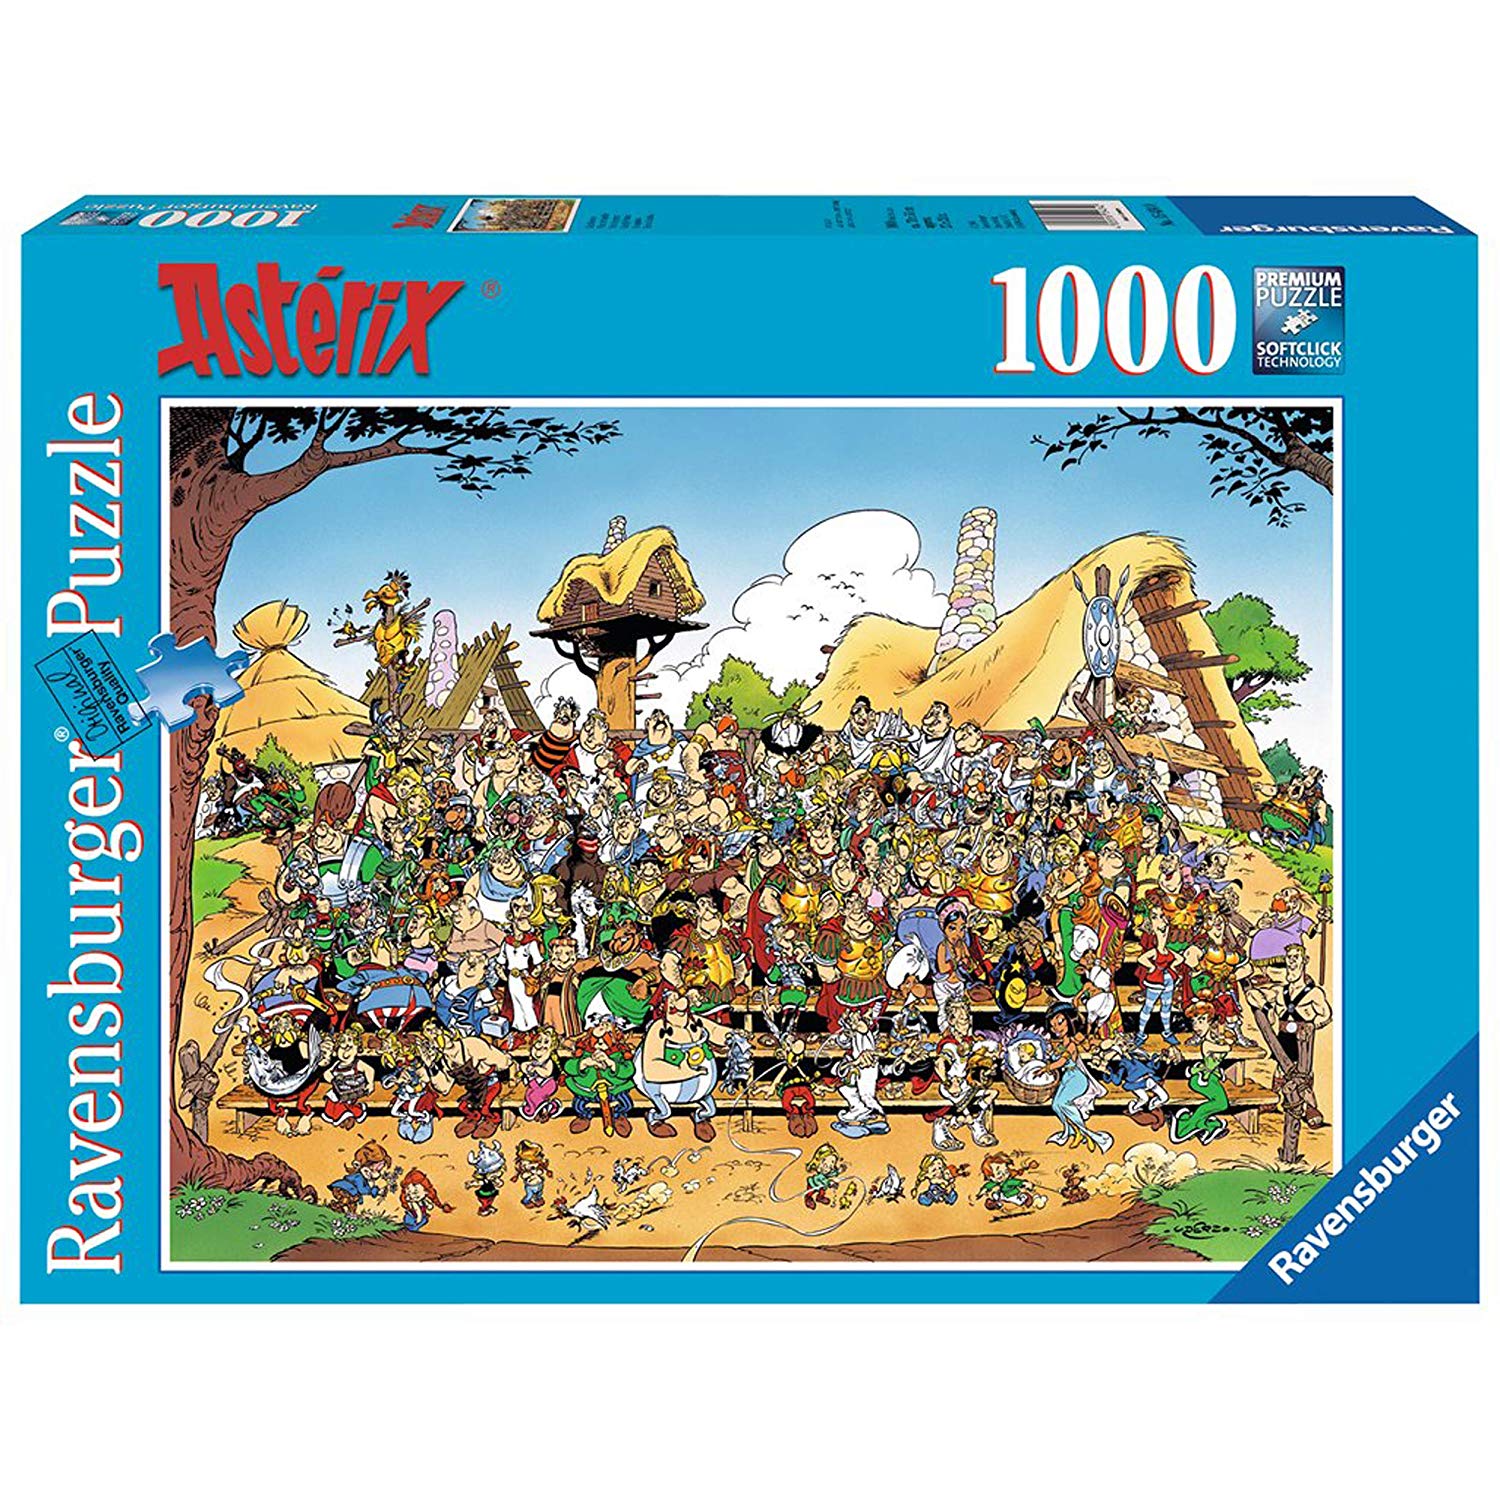 Ravensburger Asterix 15434 0 Jigsaw Puzzle Family Photo Adult Puzzles Premi